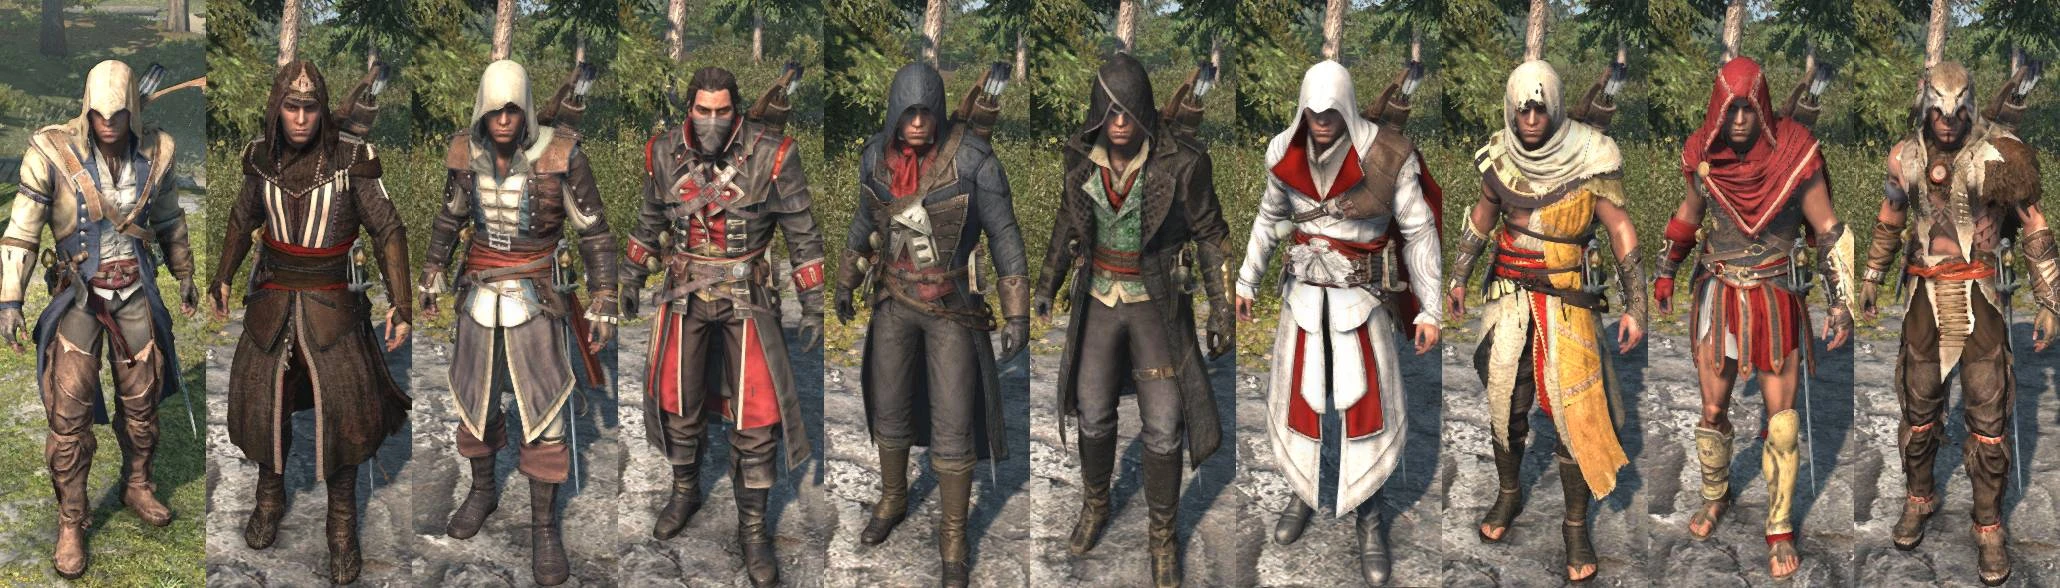 Assassin's Creed III Nexus - Mods and community